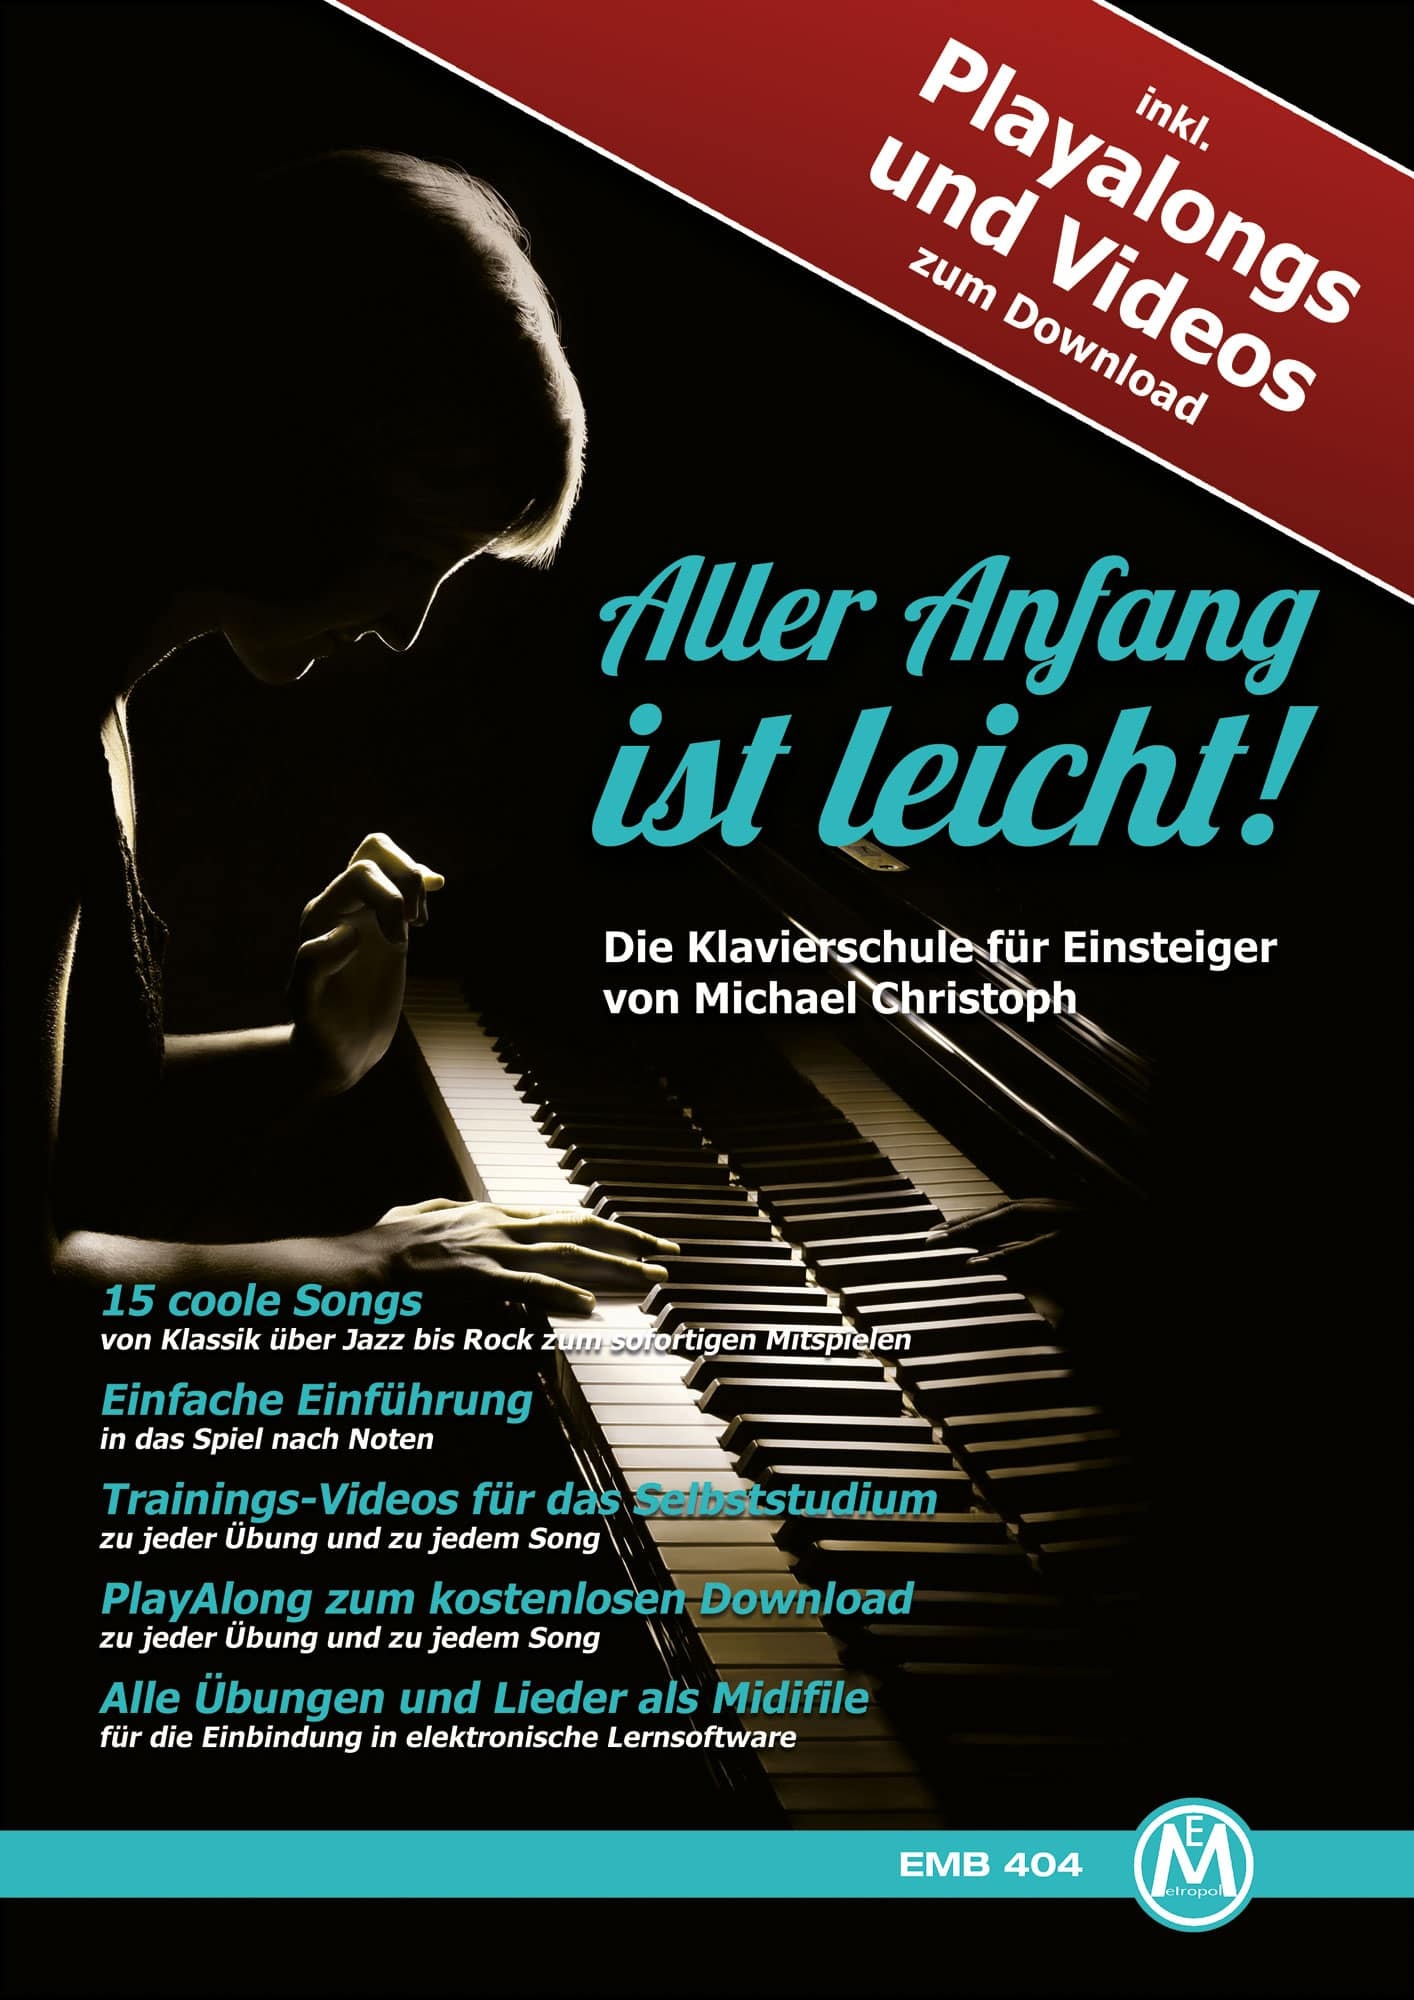 Michael Christoph "Aller Anfang ist leicht" Klavierschule + Playback-Downloads